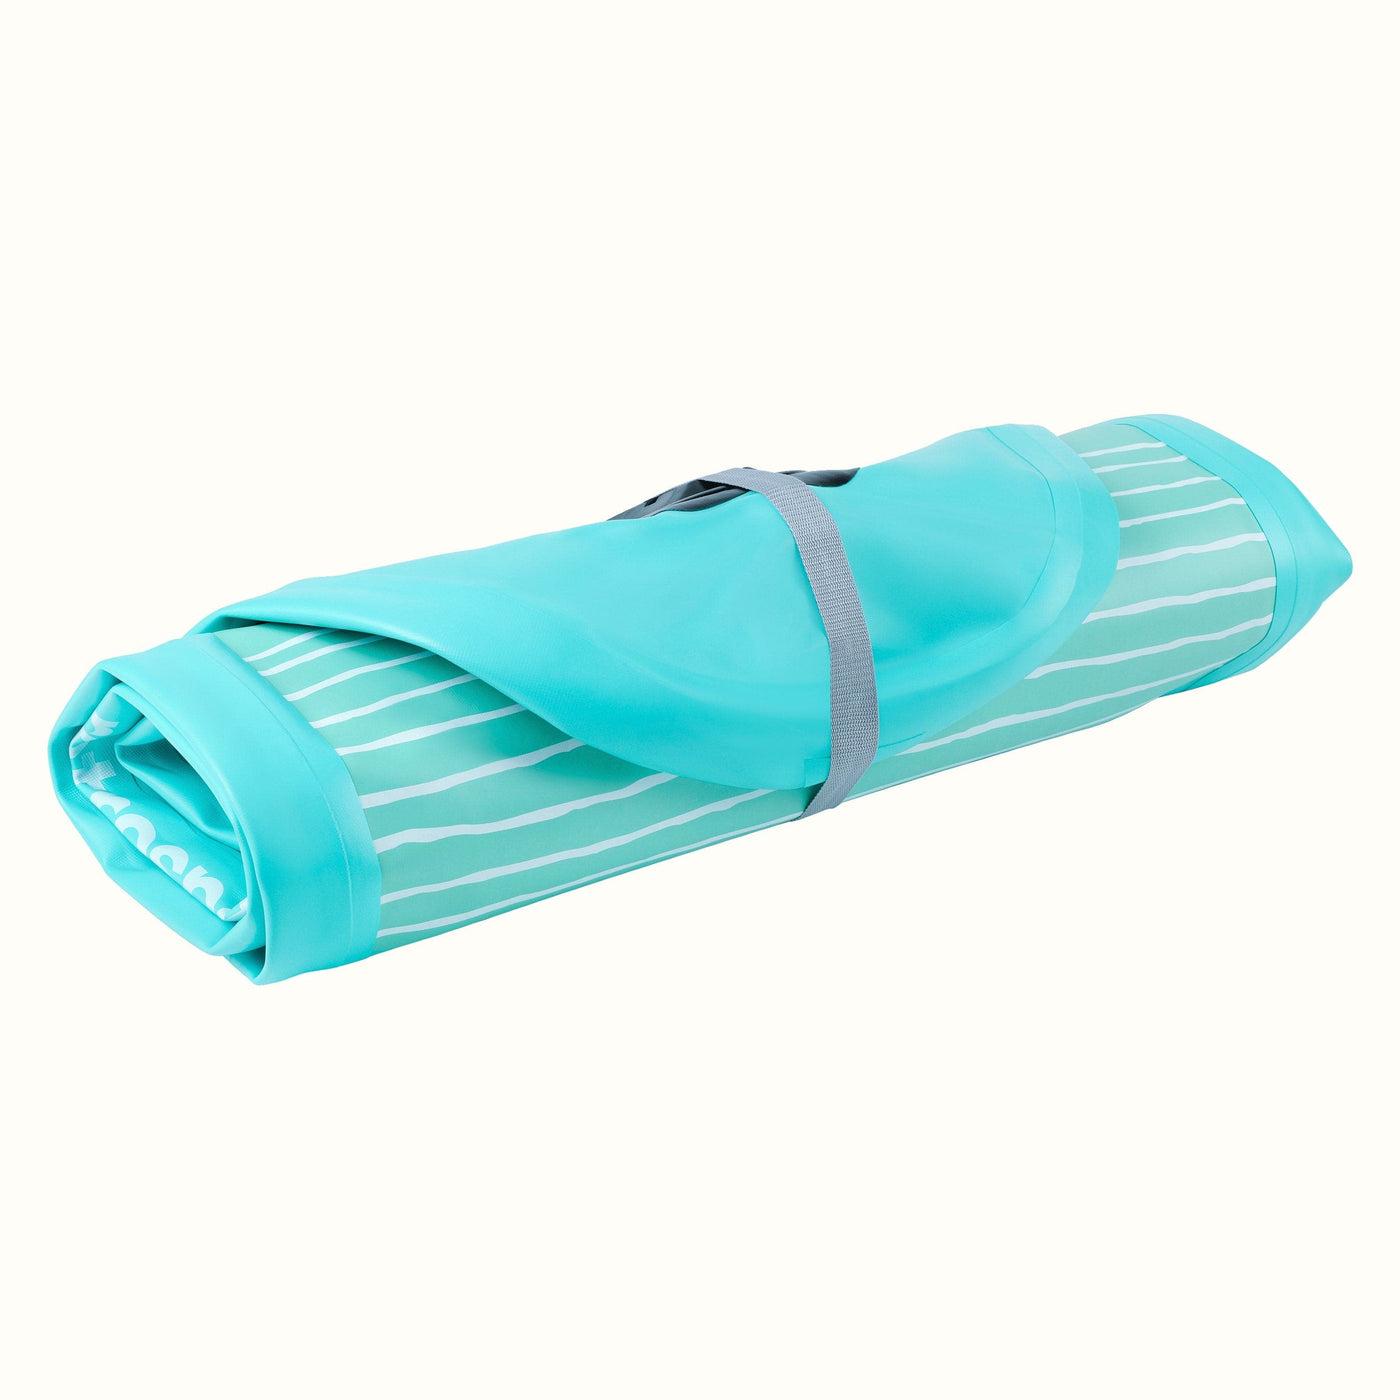 Weekender Inflatable Paddle Board 10' | Seafoam Stripes